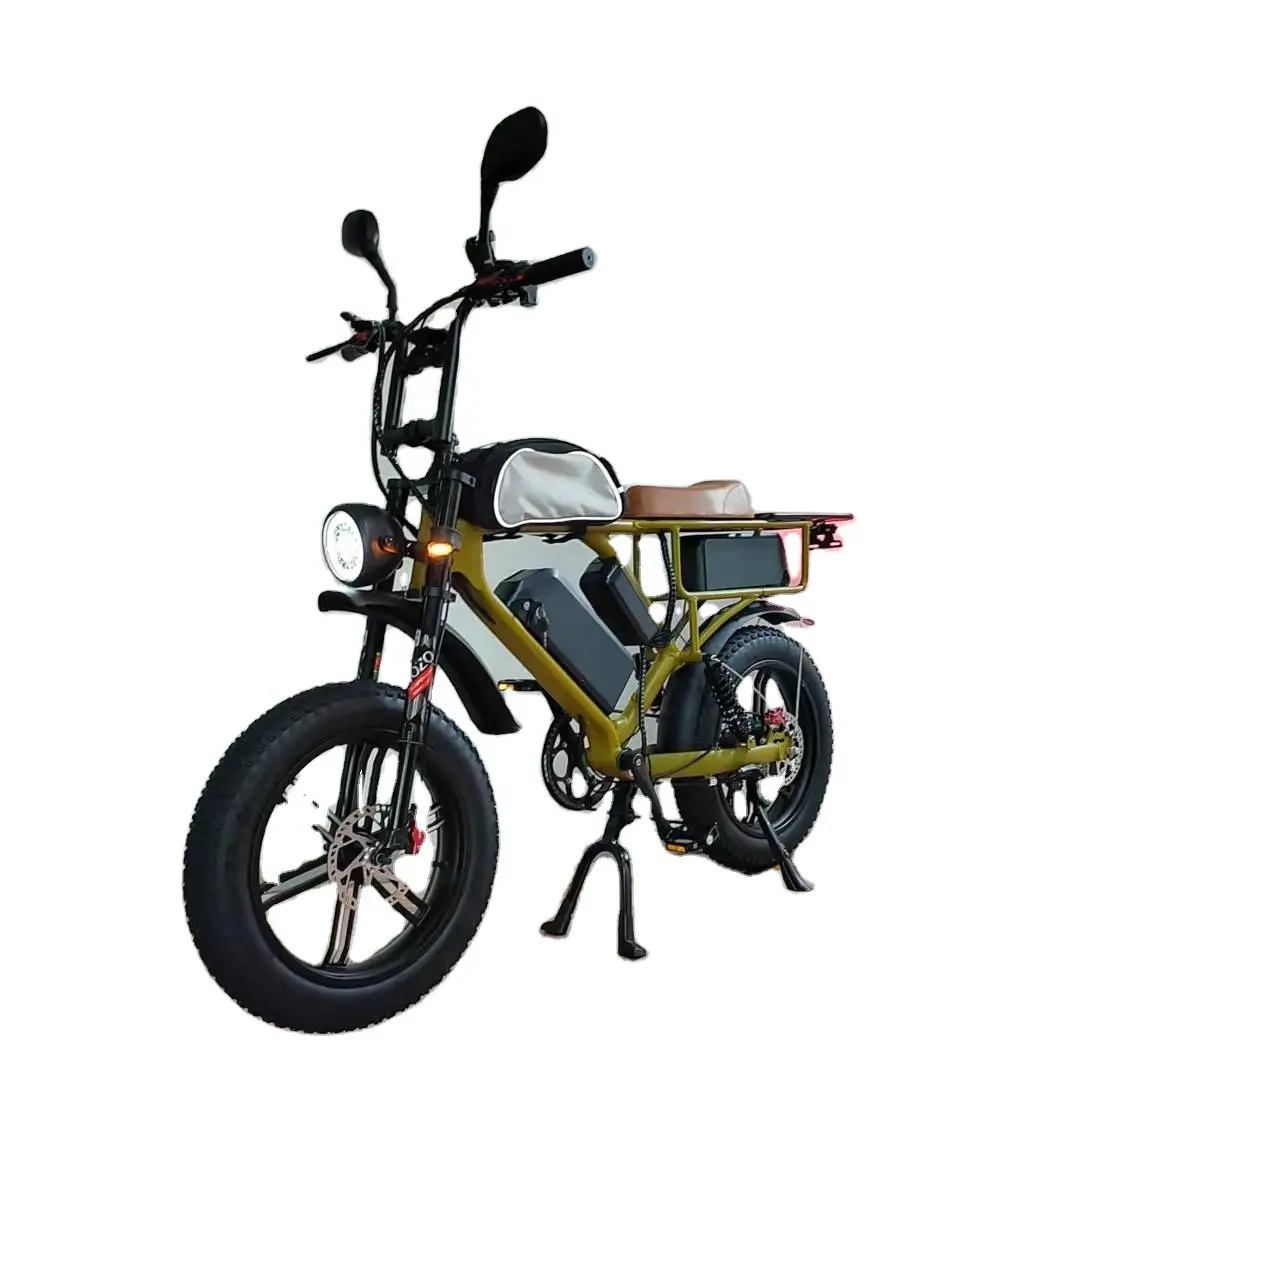 2024 Yolin nueva llegada bicicleta eléctrica Bafang motor 750W batería Dual 52V 44Ah neumático grueso Marco de aleación de aluminio todoterreno rápido ebike